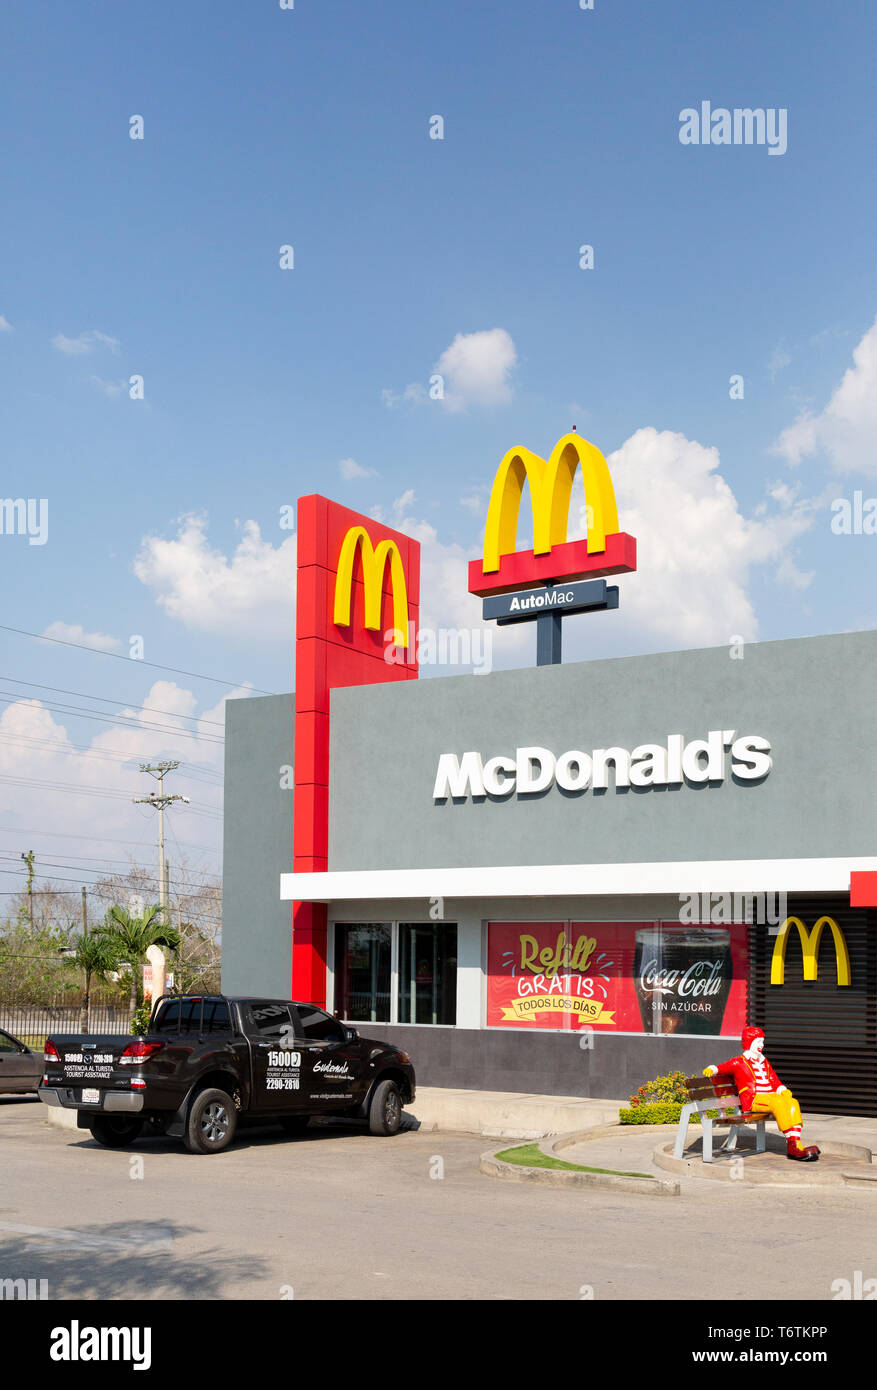 McDonalds Lateinamerika: McDonalds Fast Food Restaurant, Flores, Guatemala Mittelamerika Stockfoto